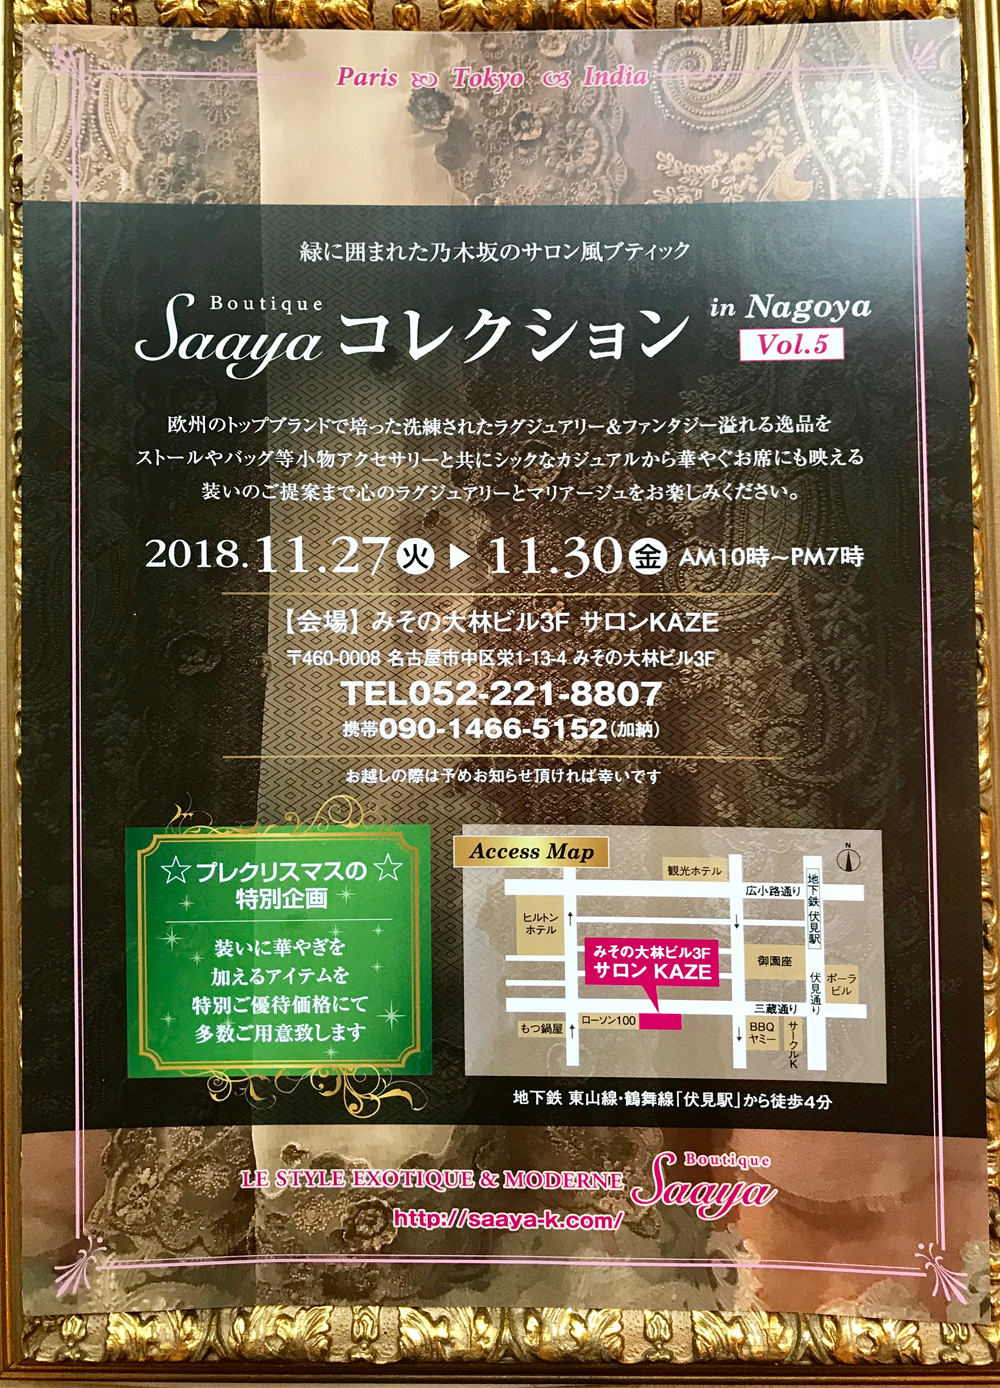 Boutique Saaya コレクション in Nagoya Vol.5